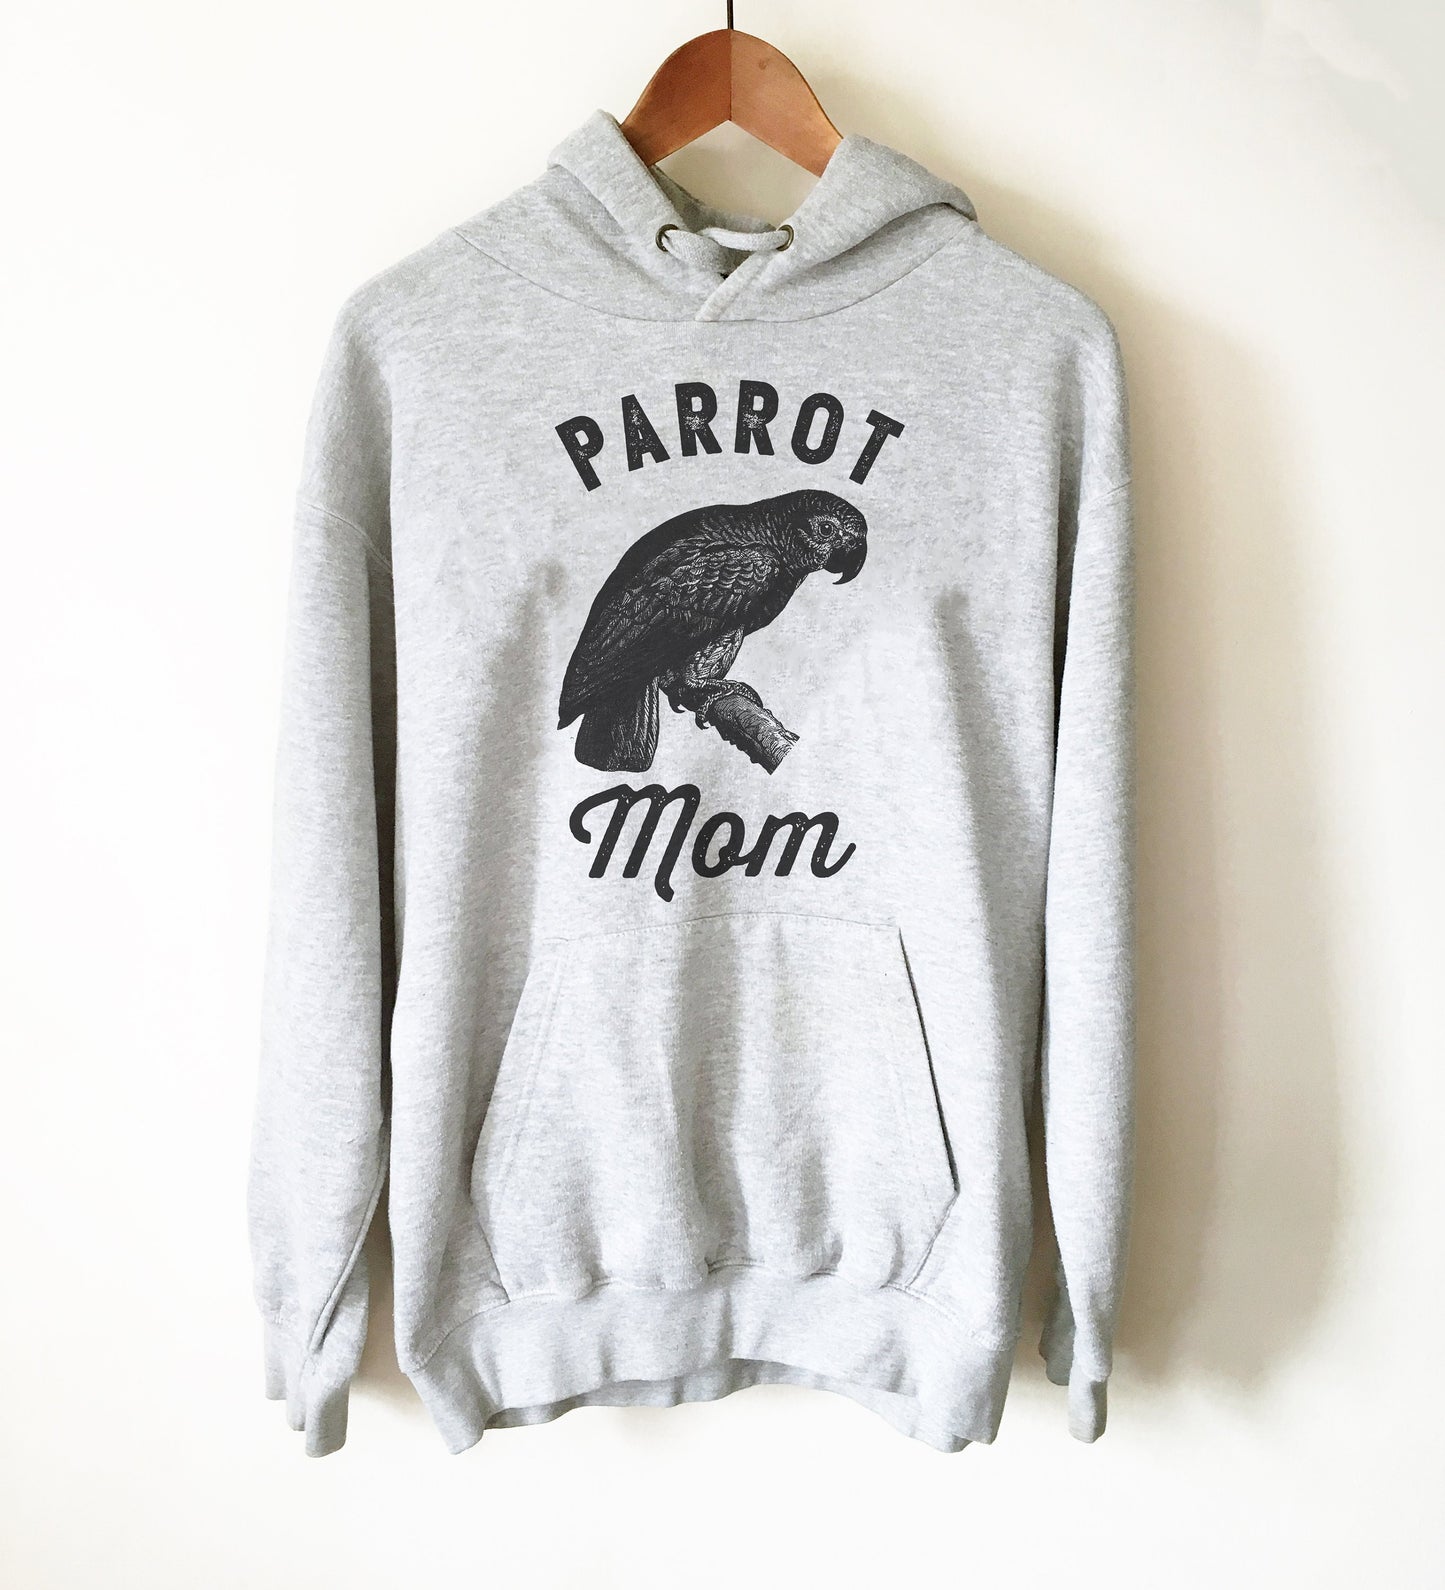 Parrot Mom Hoodie - Parrot Shirt,